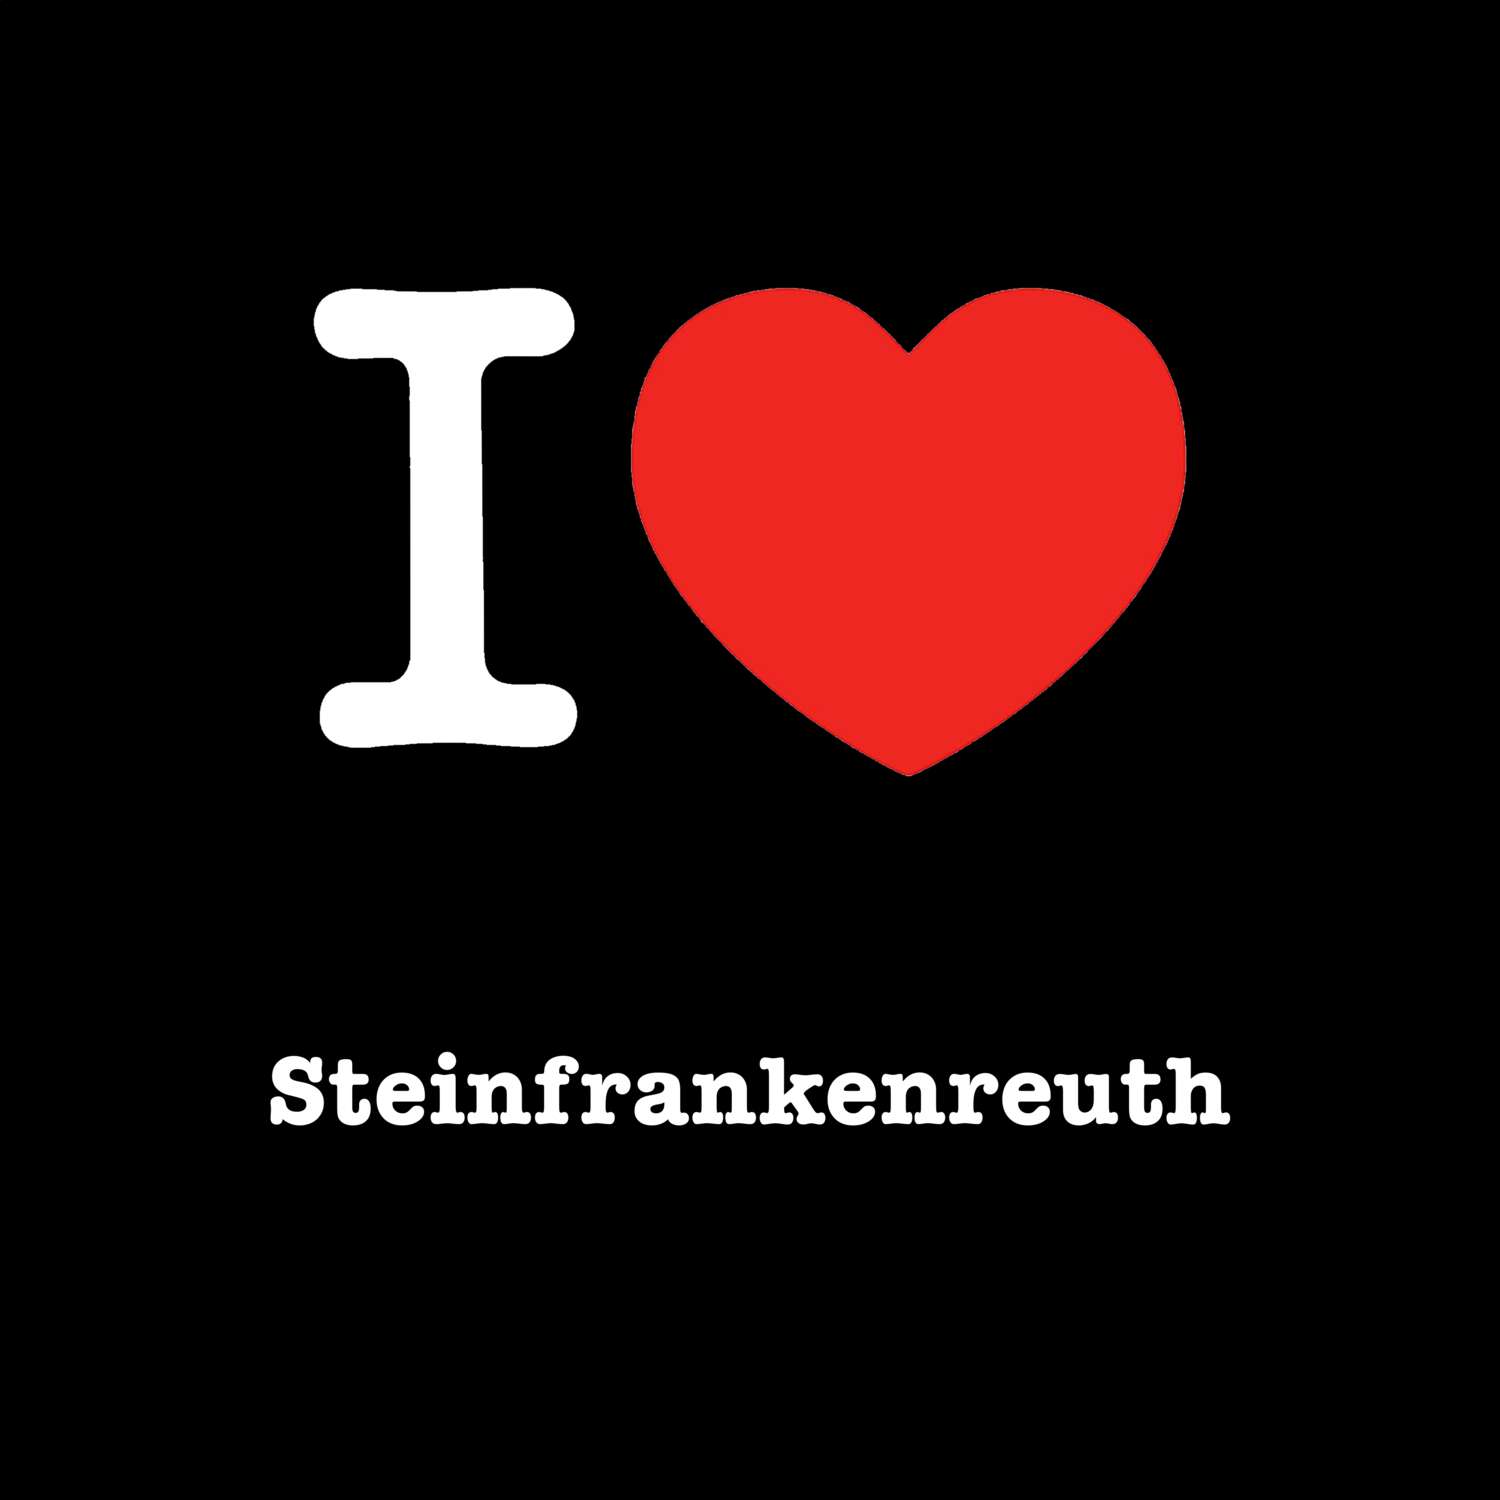 Steinfrankenreuth T-Shirt »I love«